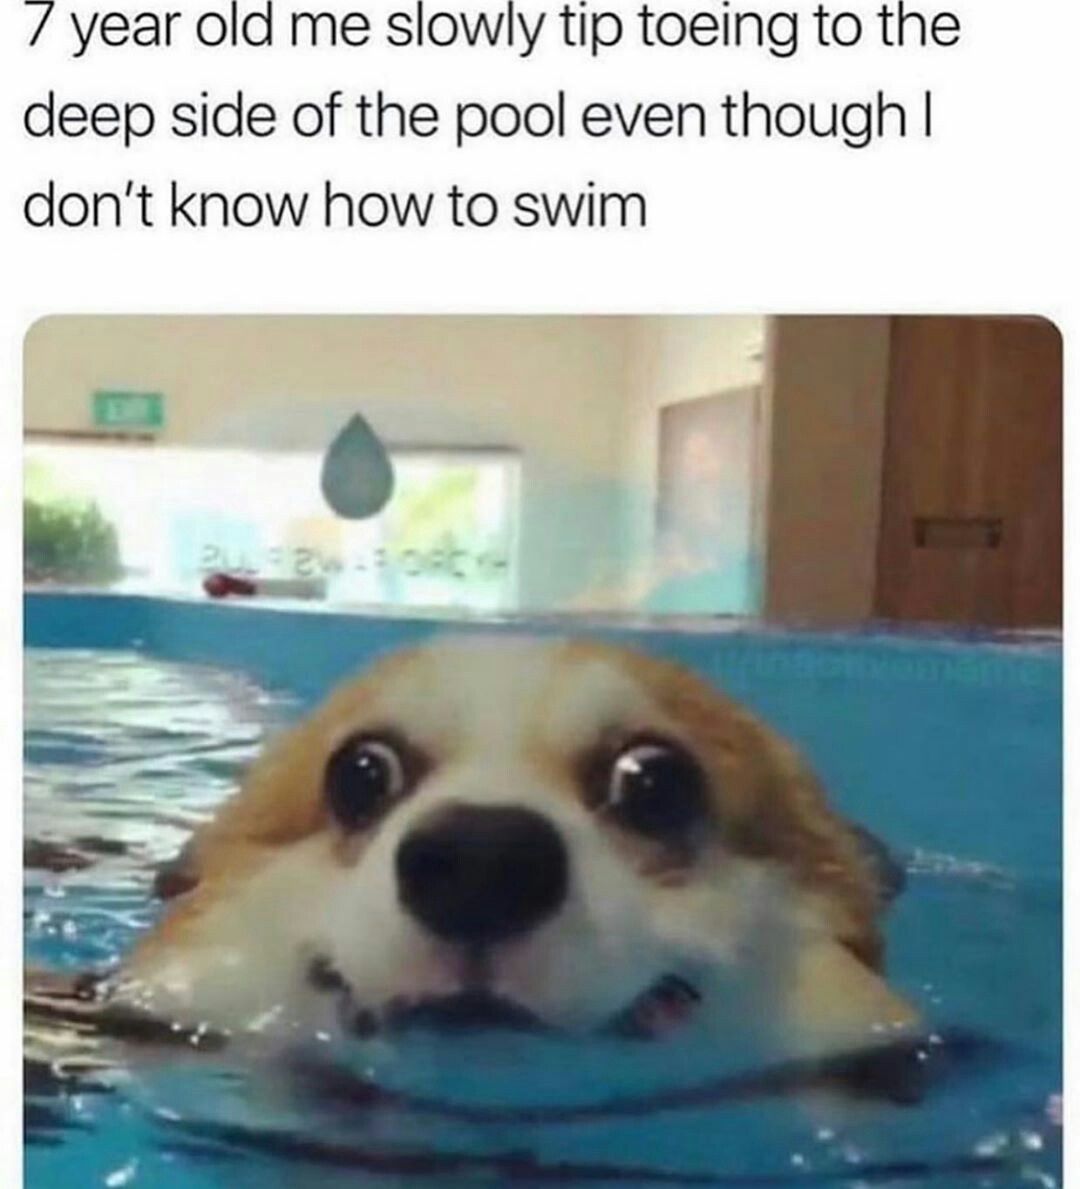 Me still not no to swim tho - meme